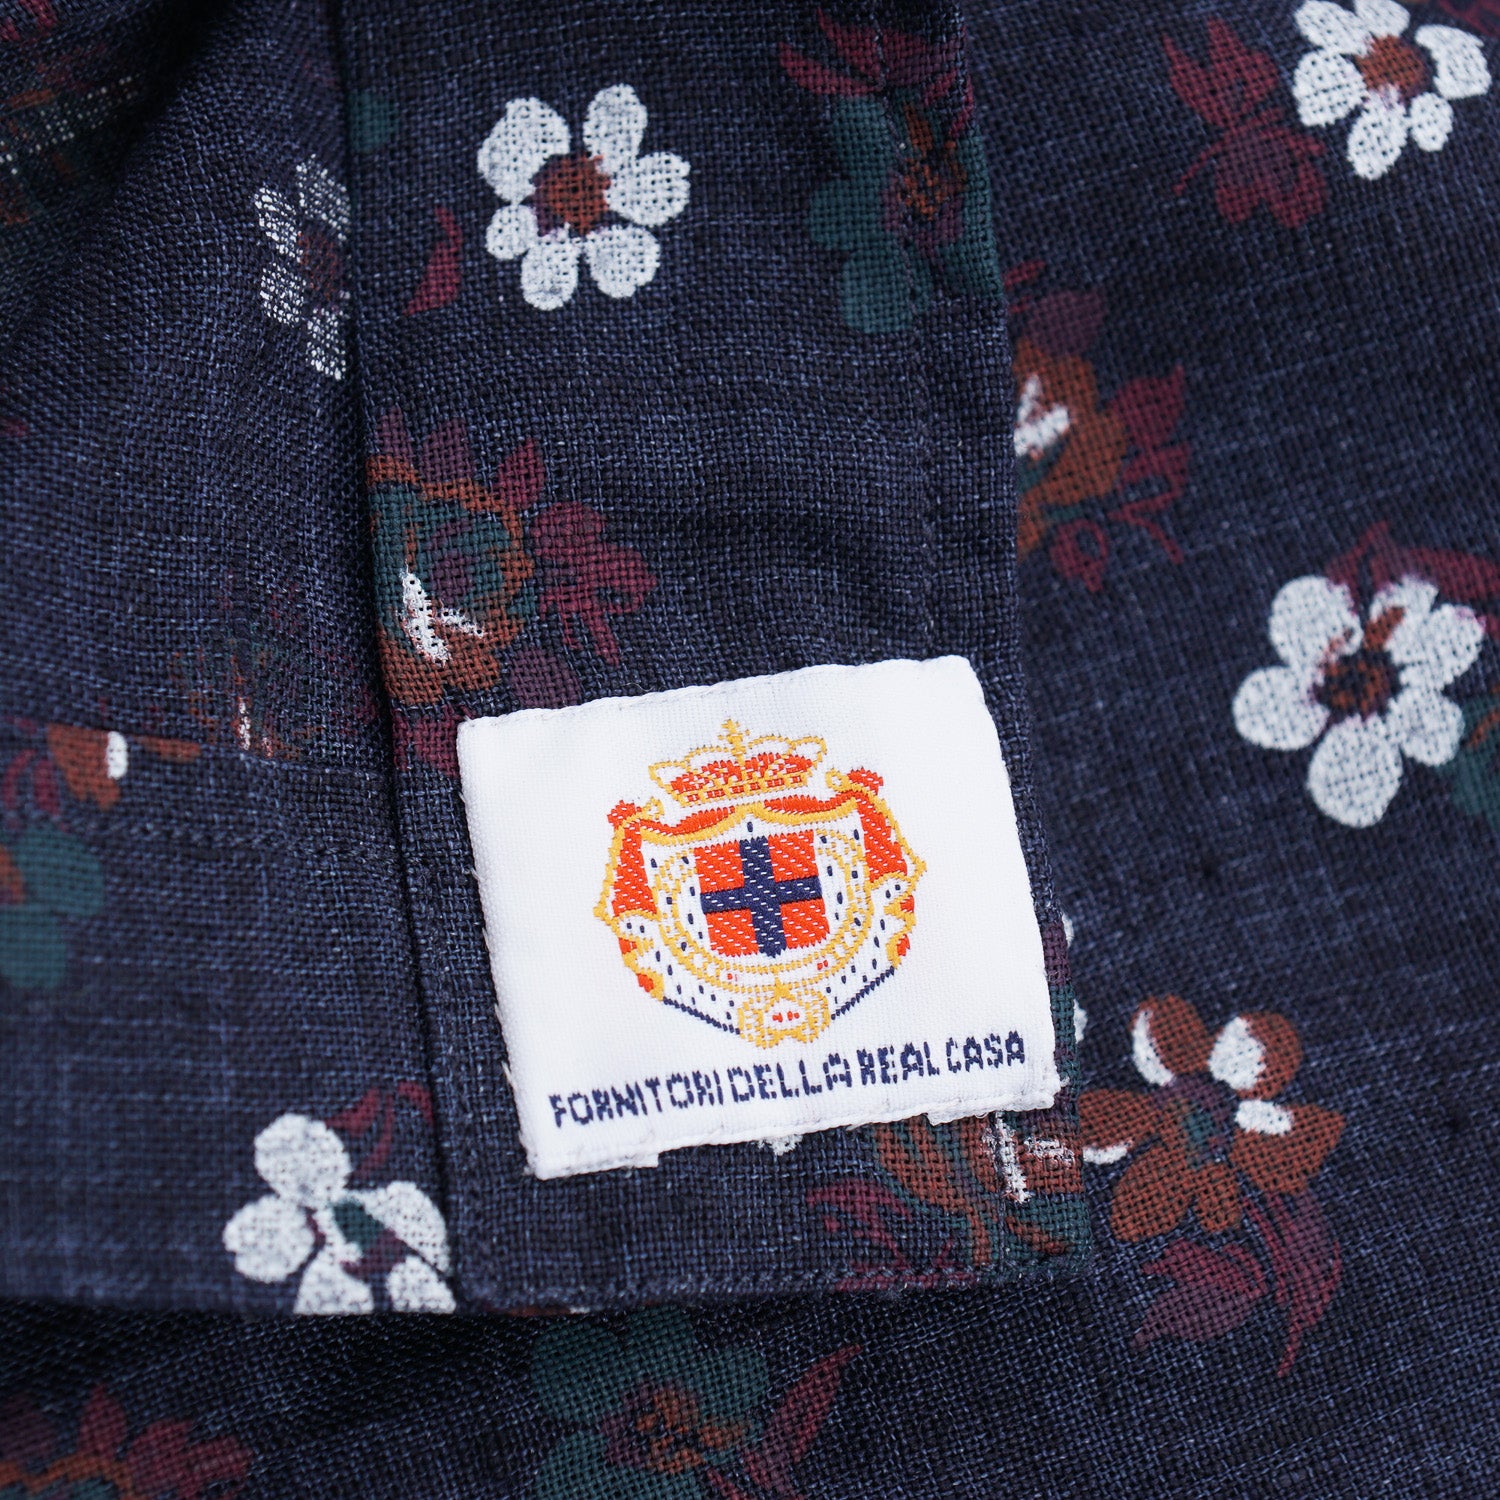 Luigi Borrelli Floral Print Linen Shirt - Top Shelf Apparel